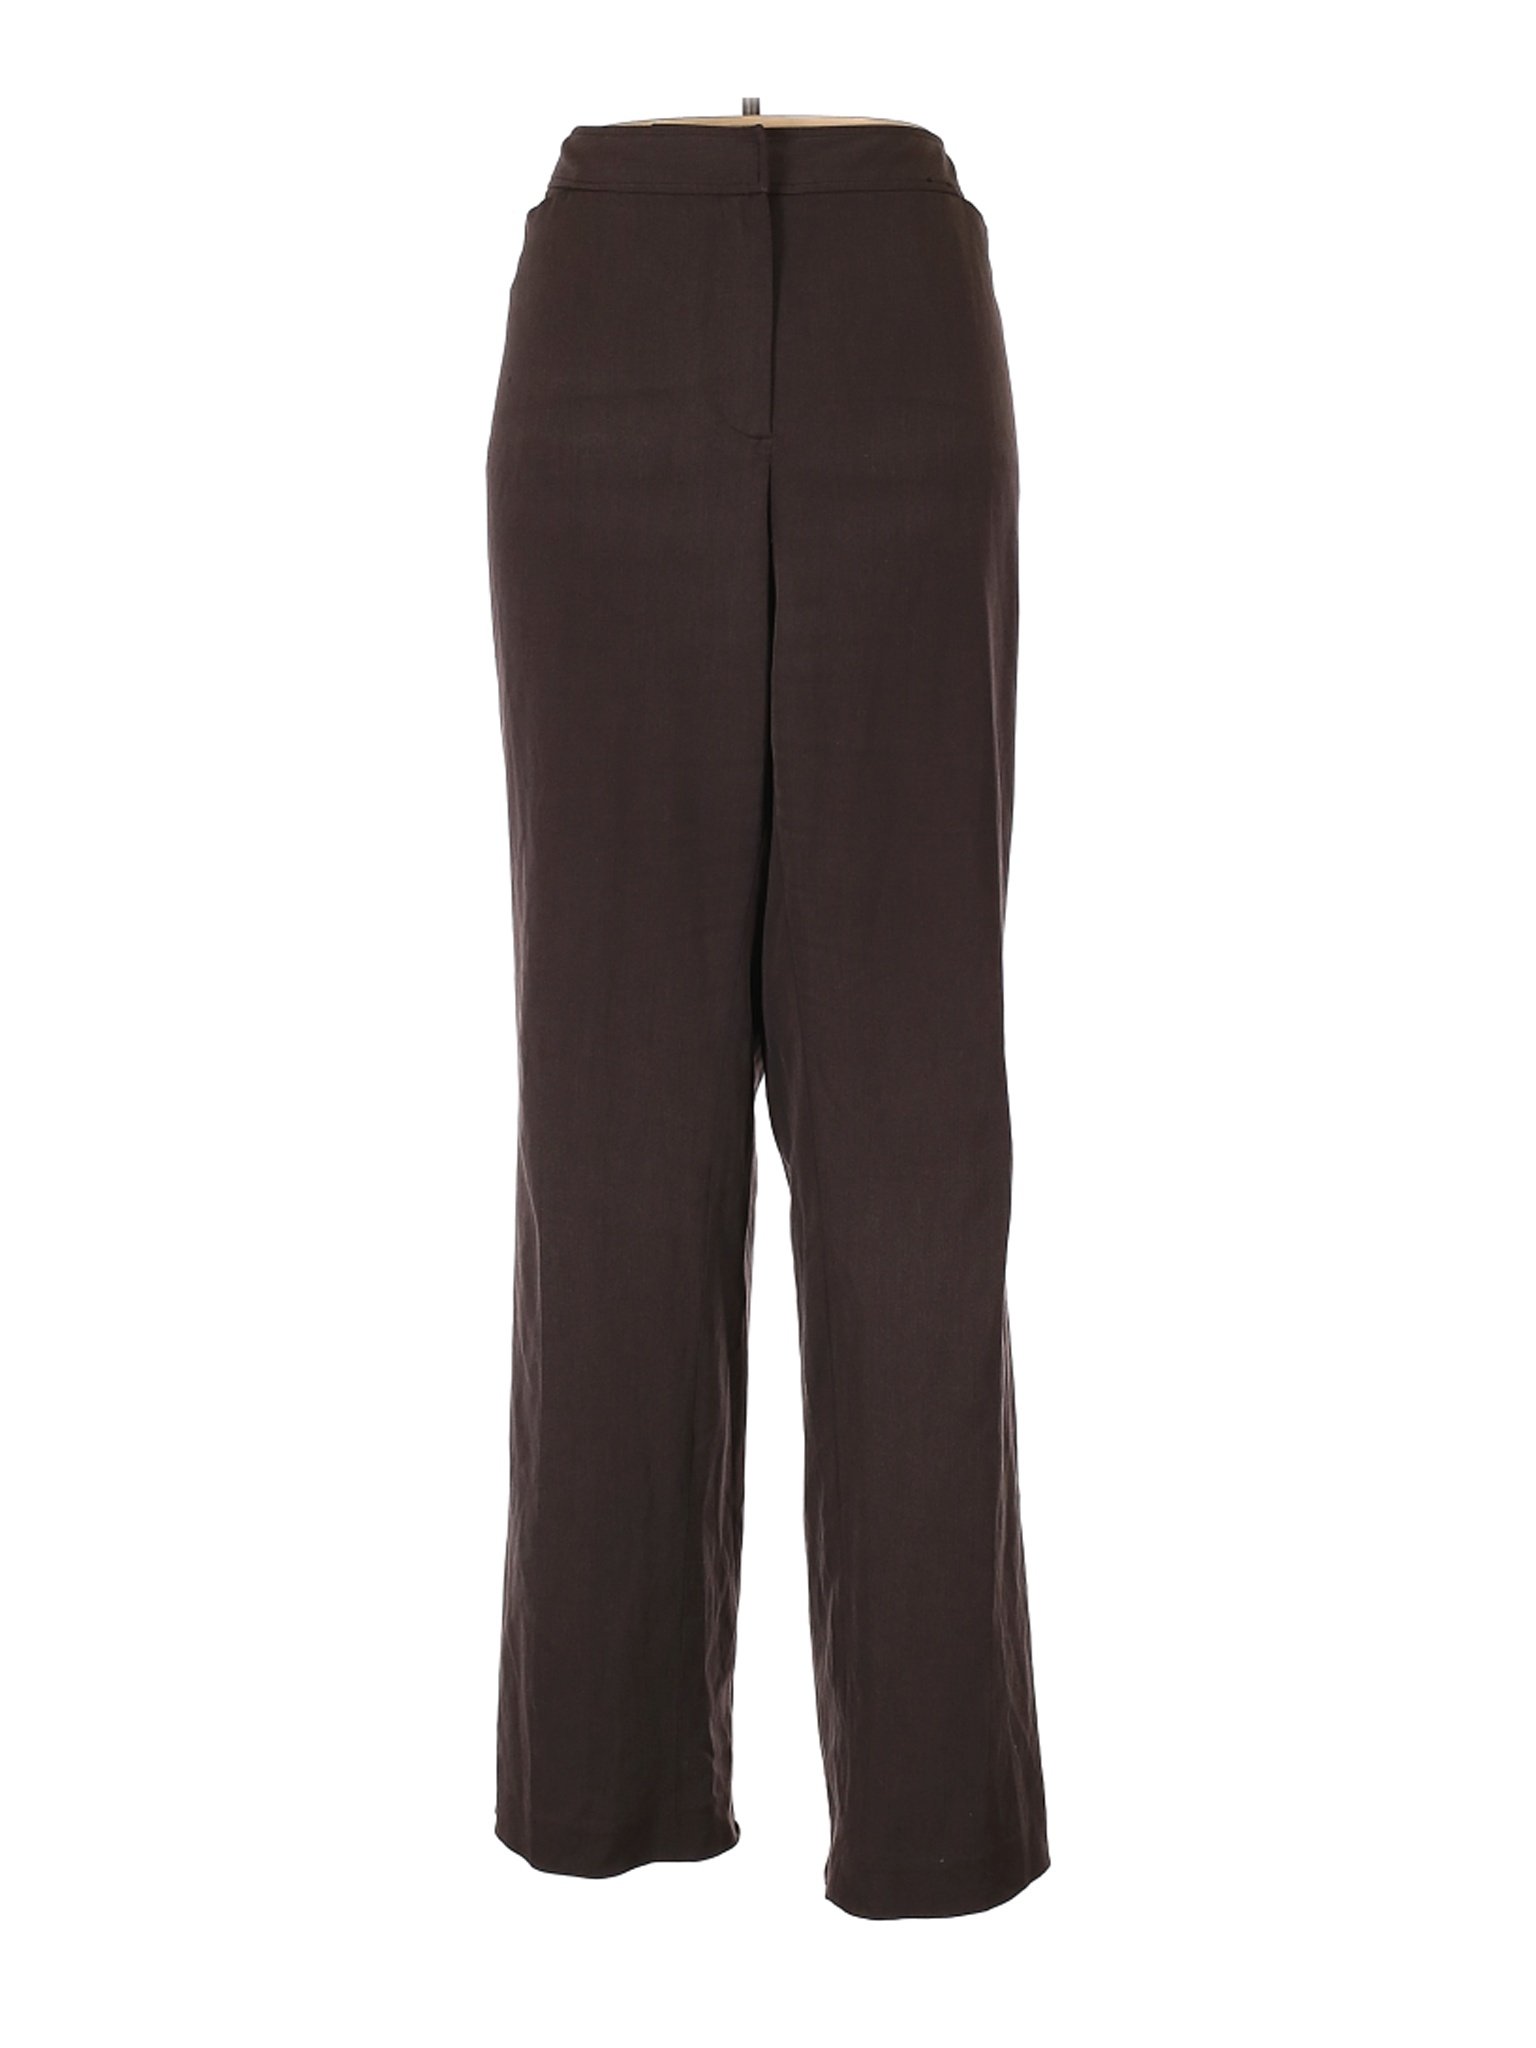 Lane Bryant Women Brown Casual Pants 18 Plus | eBay